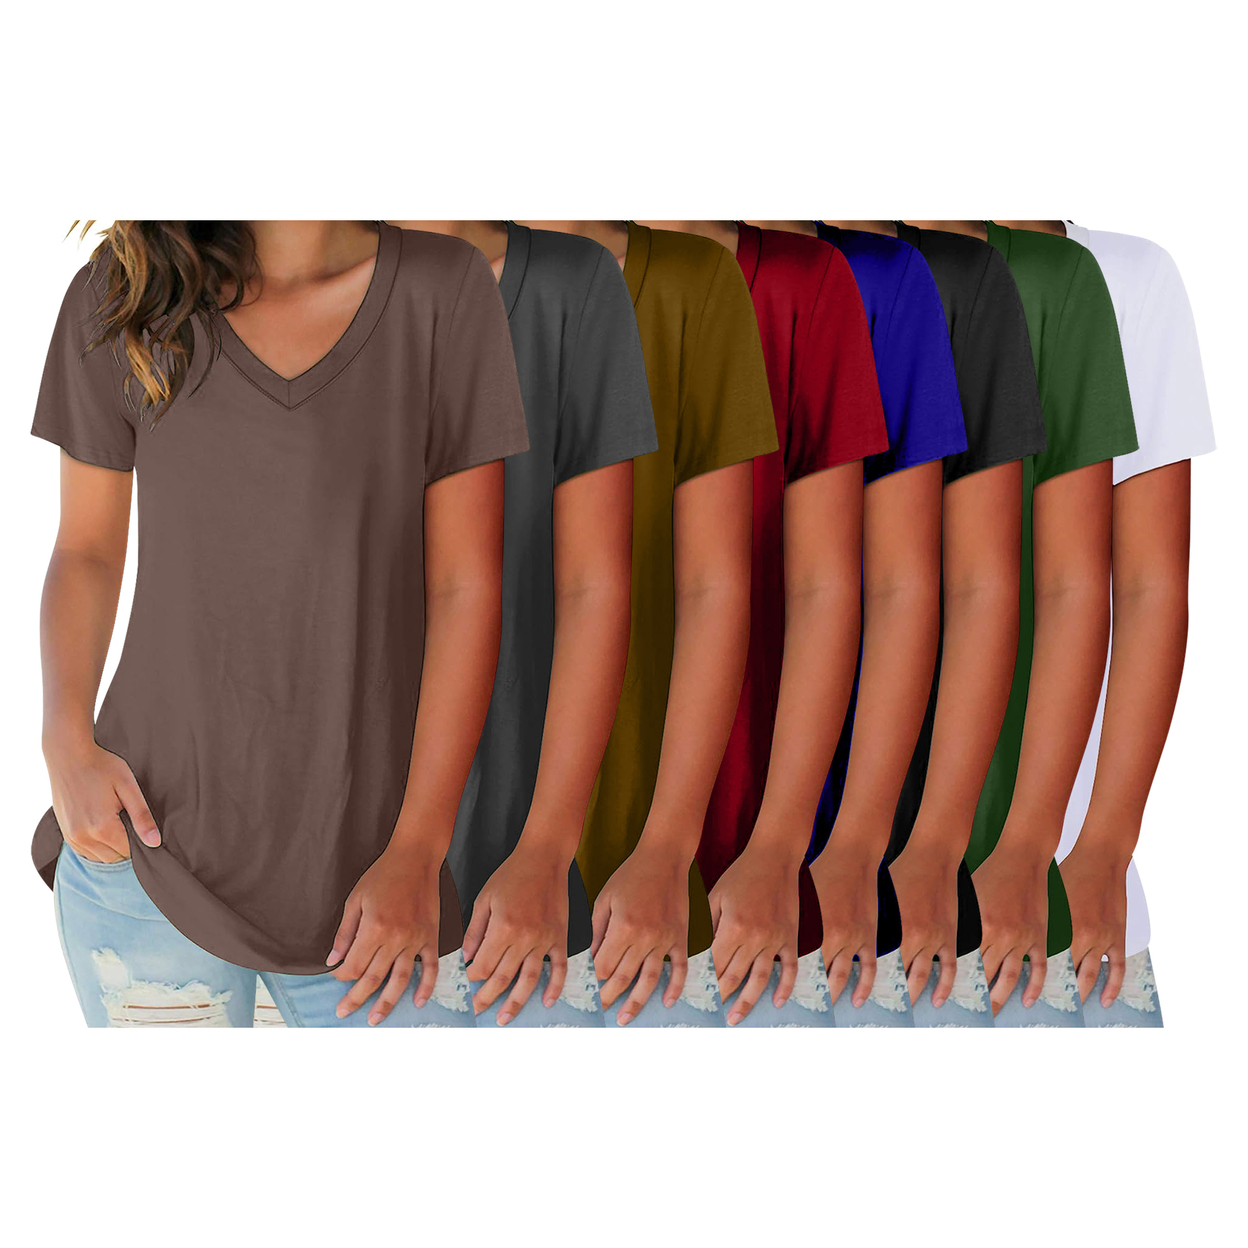 2-Pack: Women's Ultra Soft Smooth Cotton Blend Basic V-Neck Short Sleeve Shirts - Black & Mustard, Small